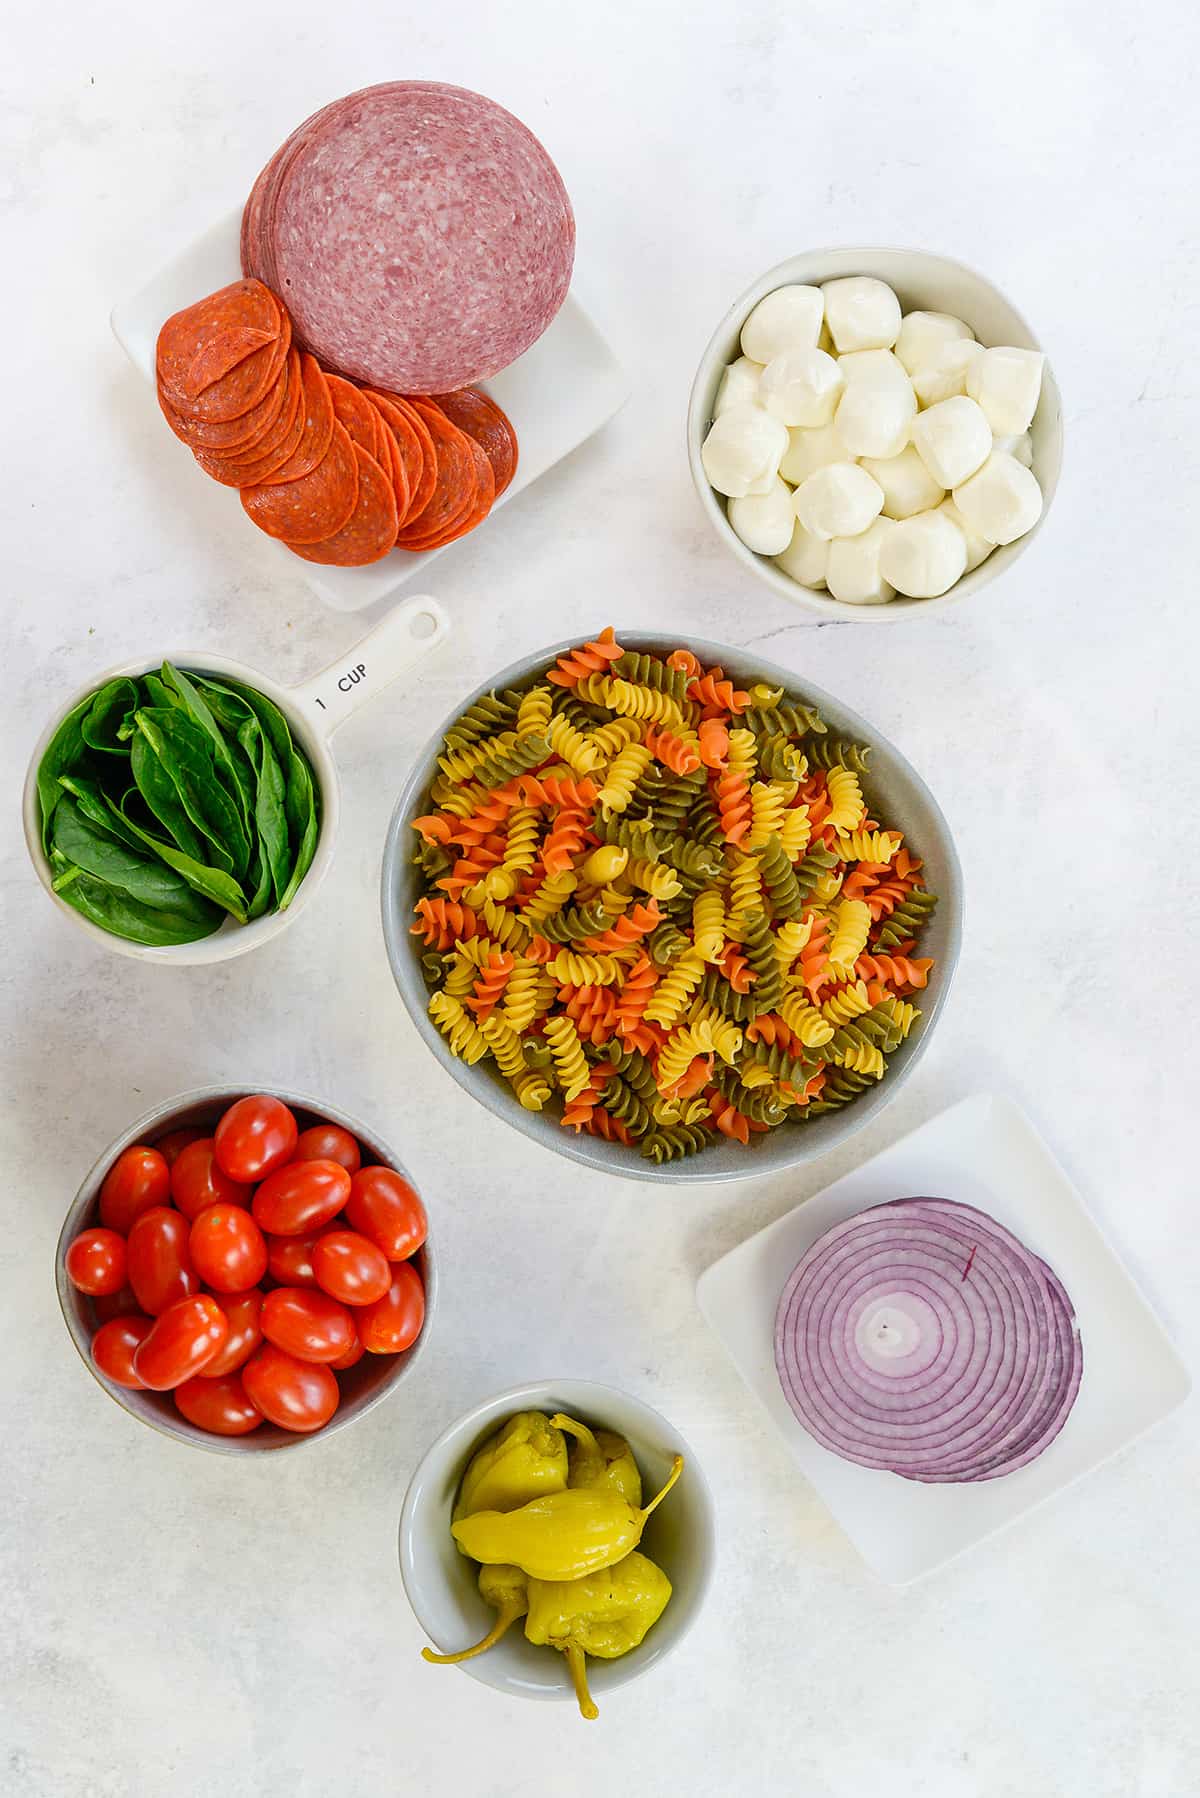 ingredients for italian pasta salad.